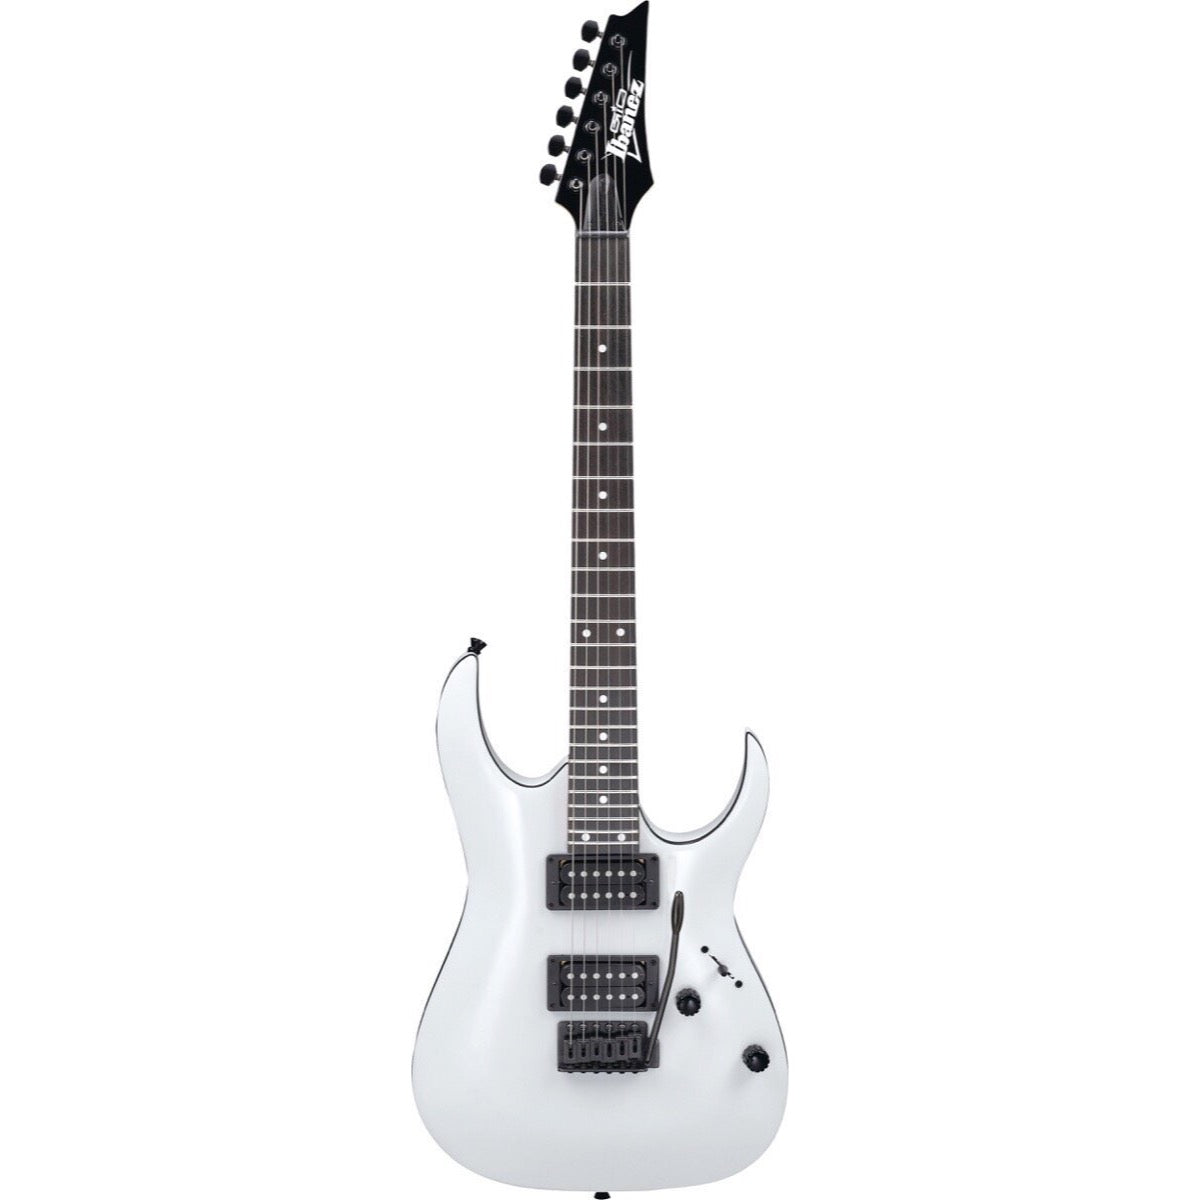 Ibanez GRGA120 Gio Series Electric Guitar, White